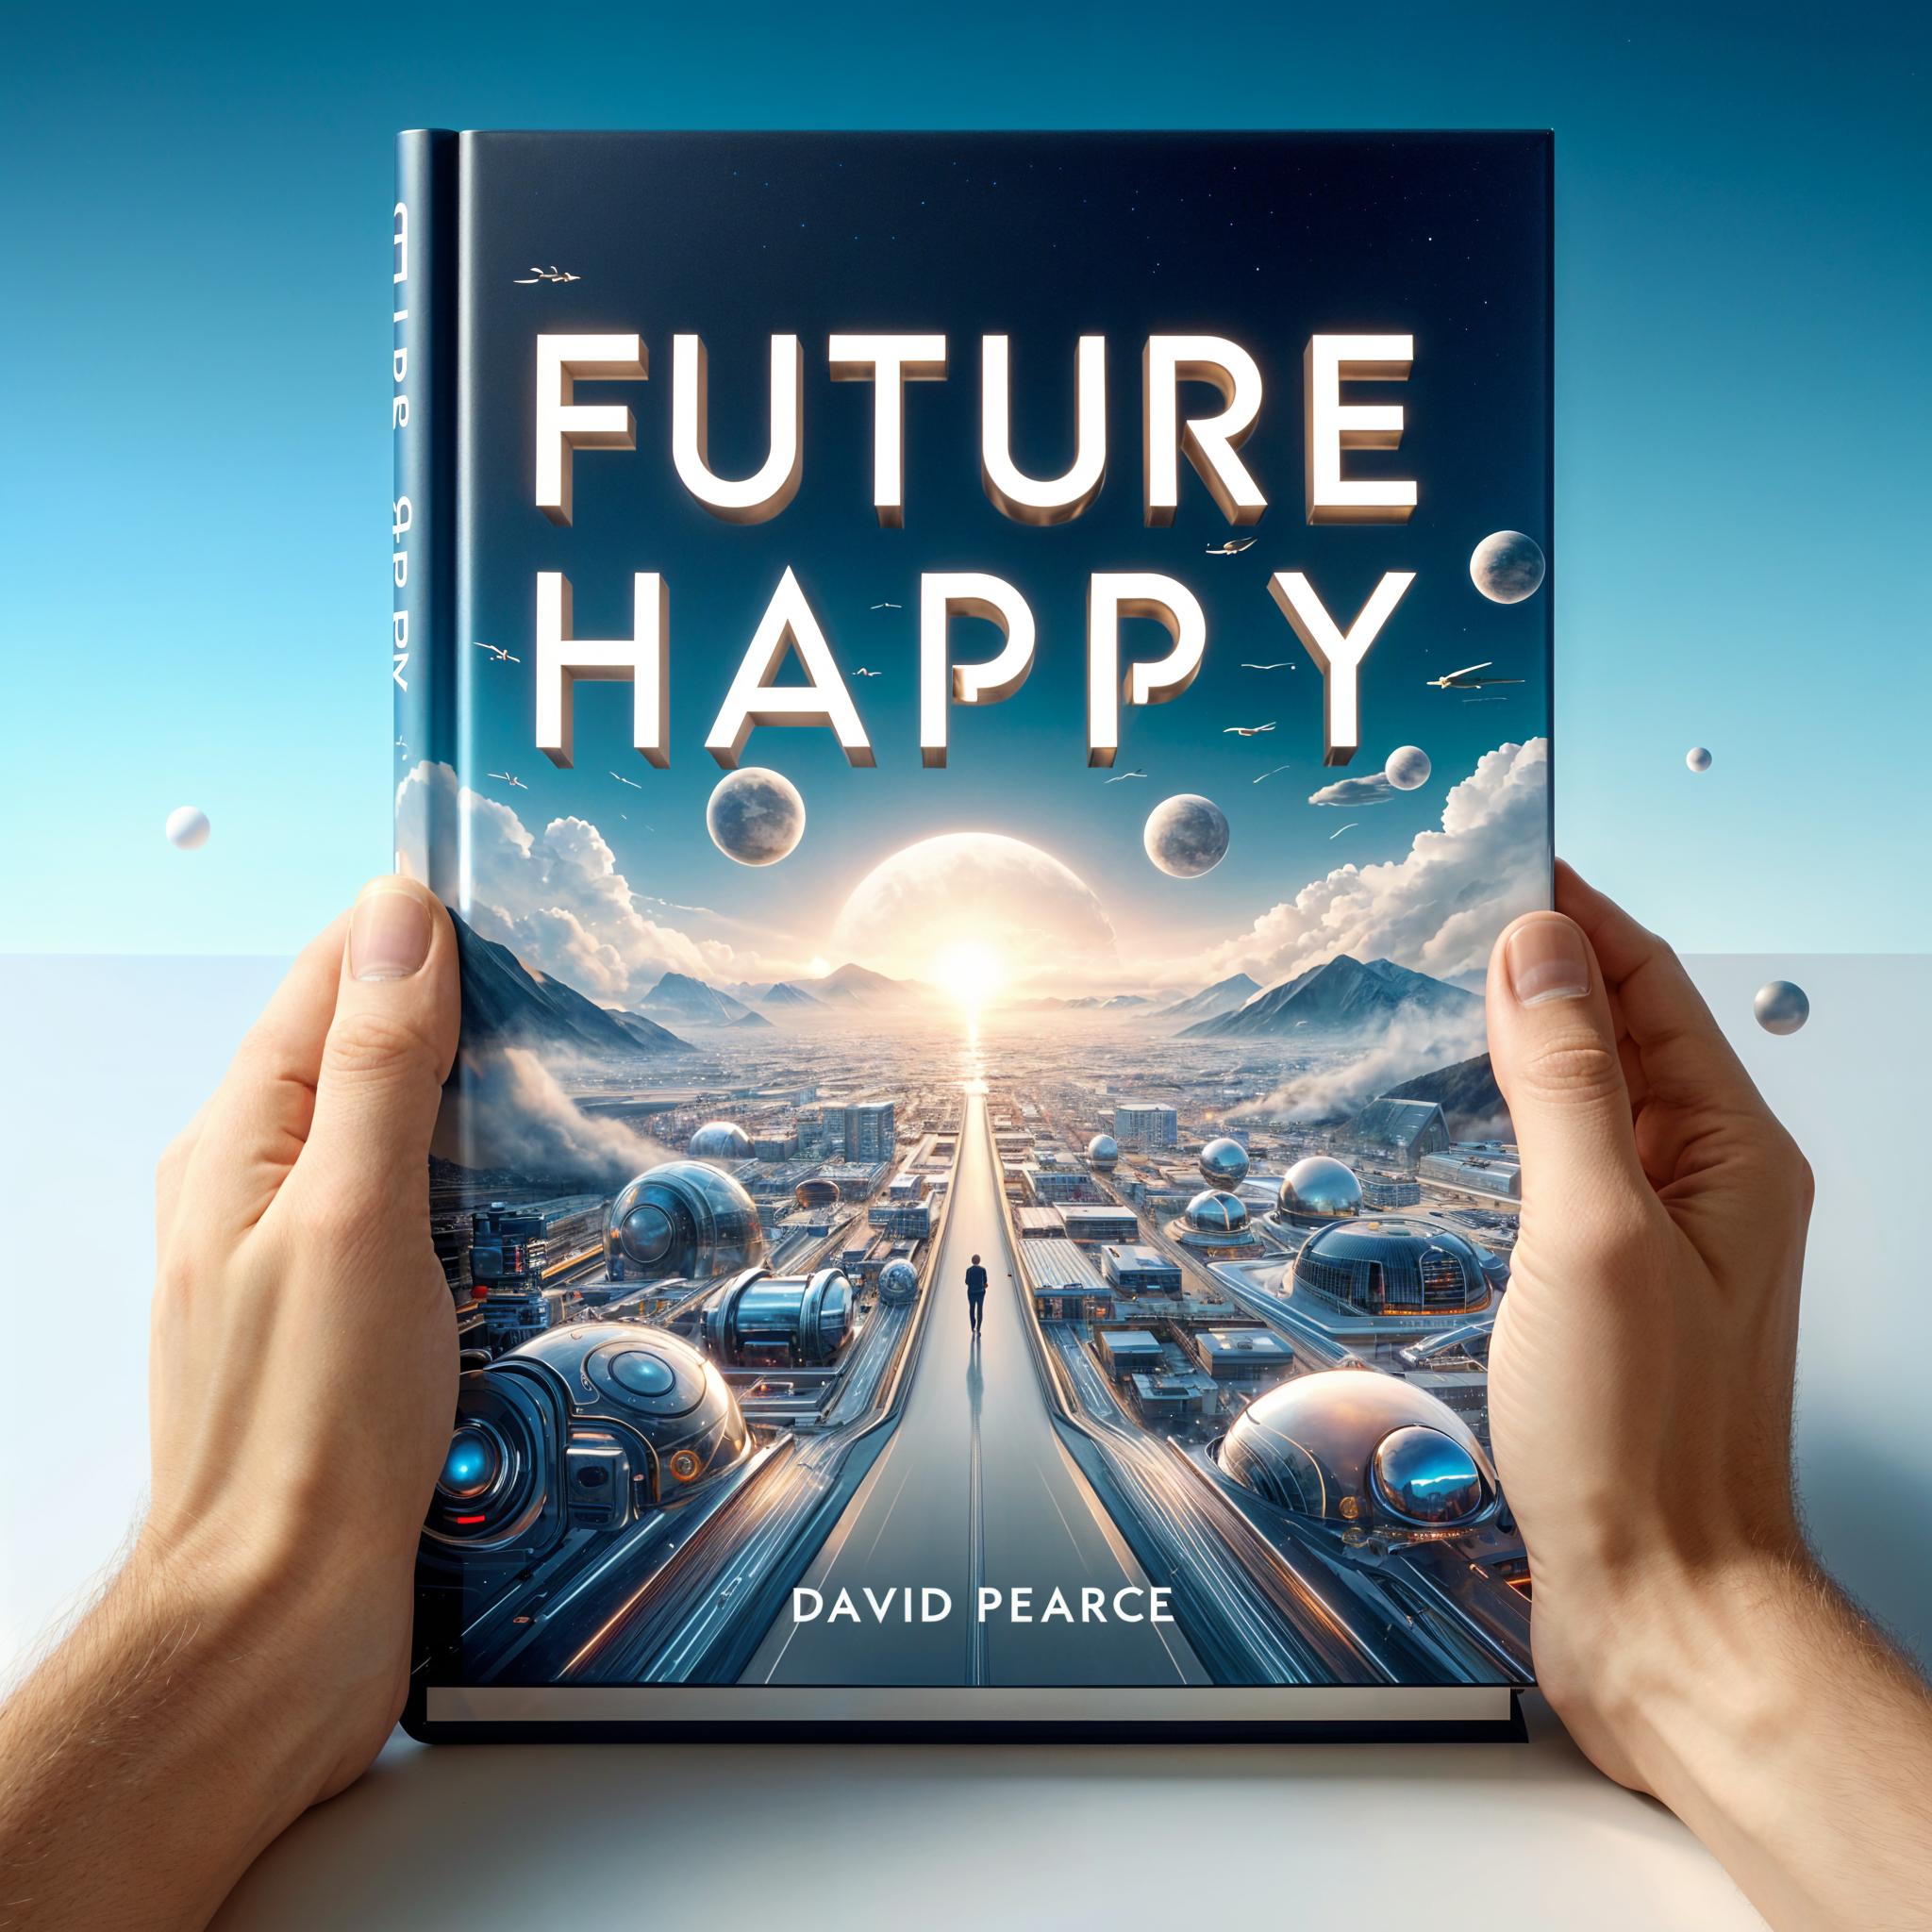 Future Happy by David Pearce